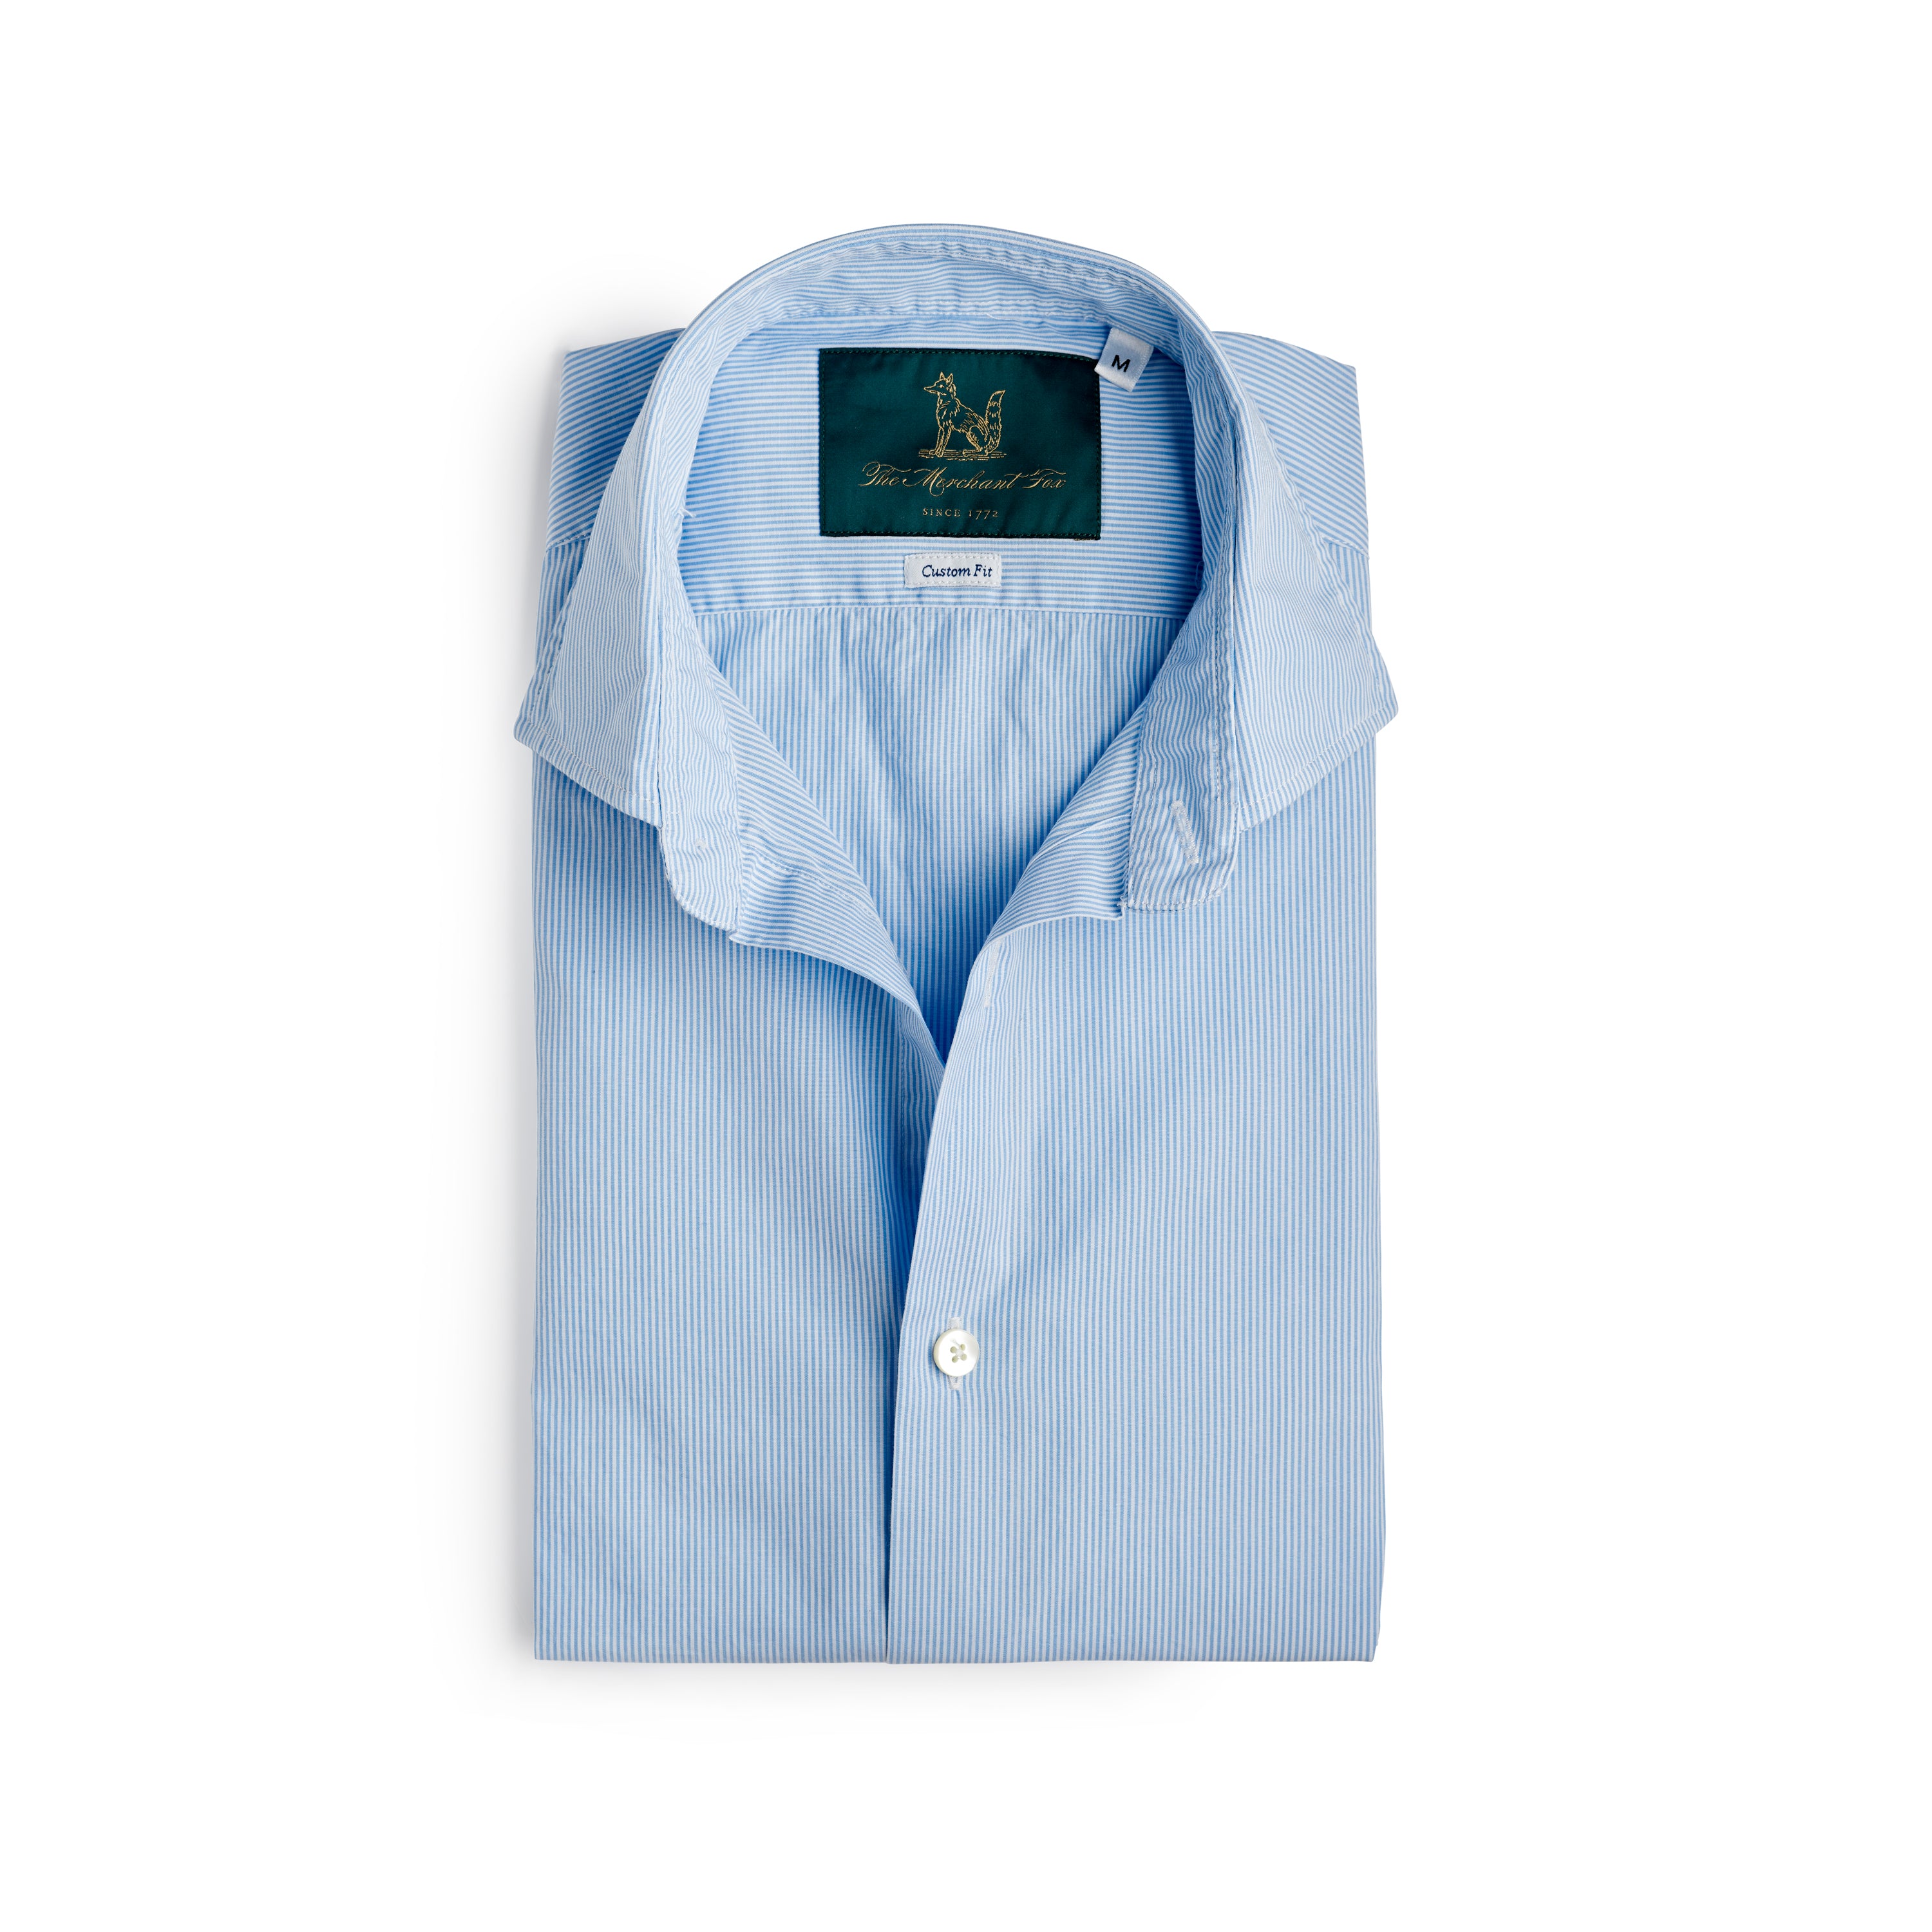 Spread Collar Cotton Shirt in White & Light Blue Thin Stripes